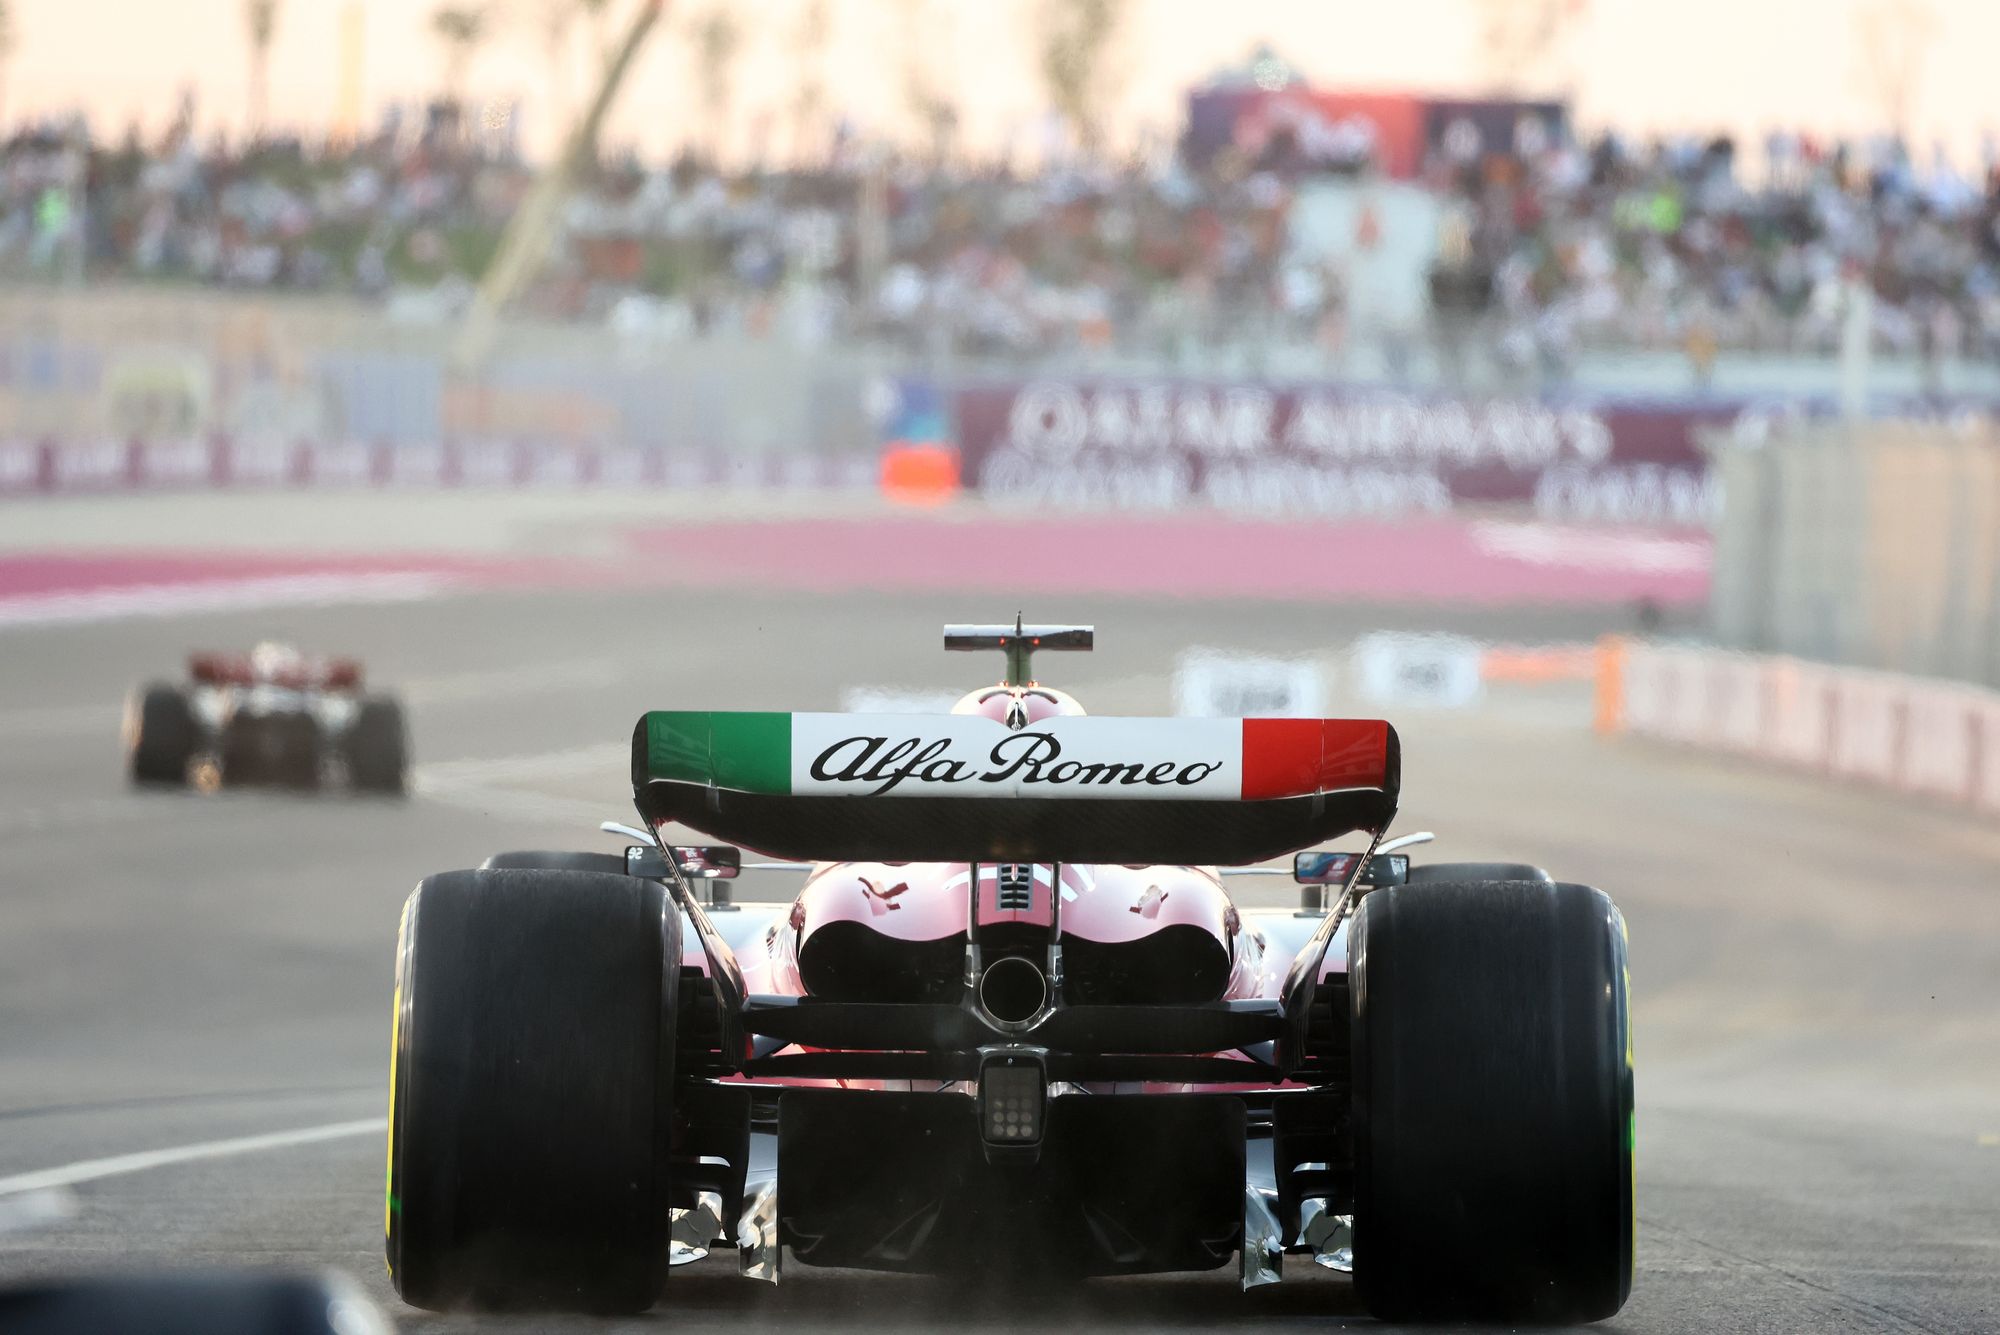 Formula One statistics for the Qatar Grand Prix